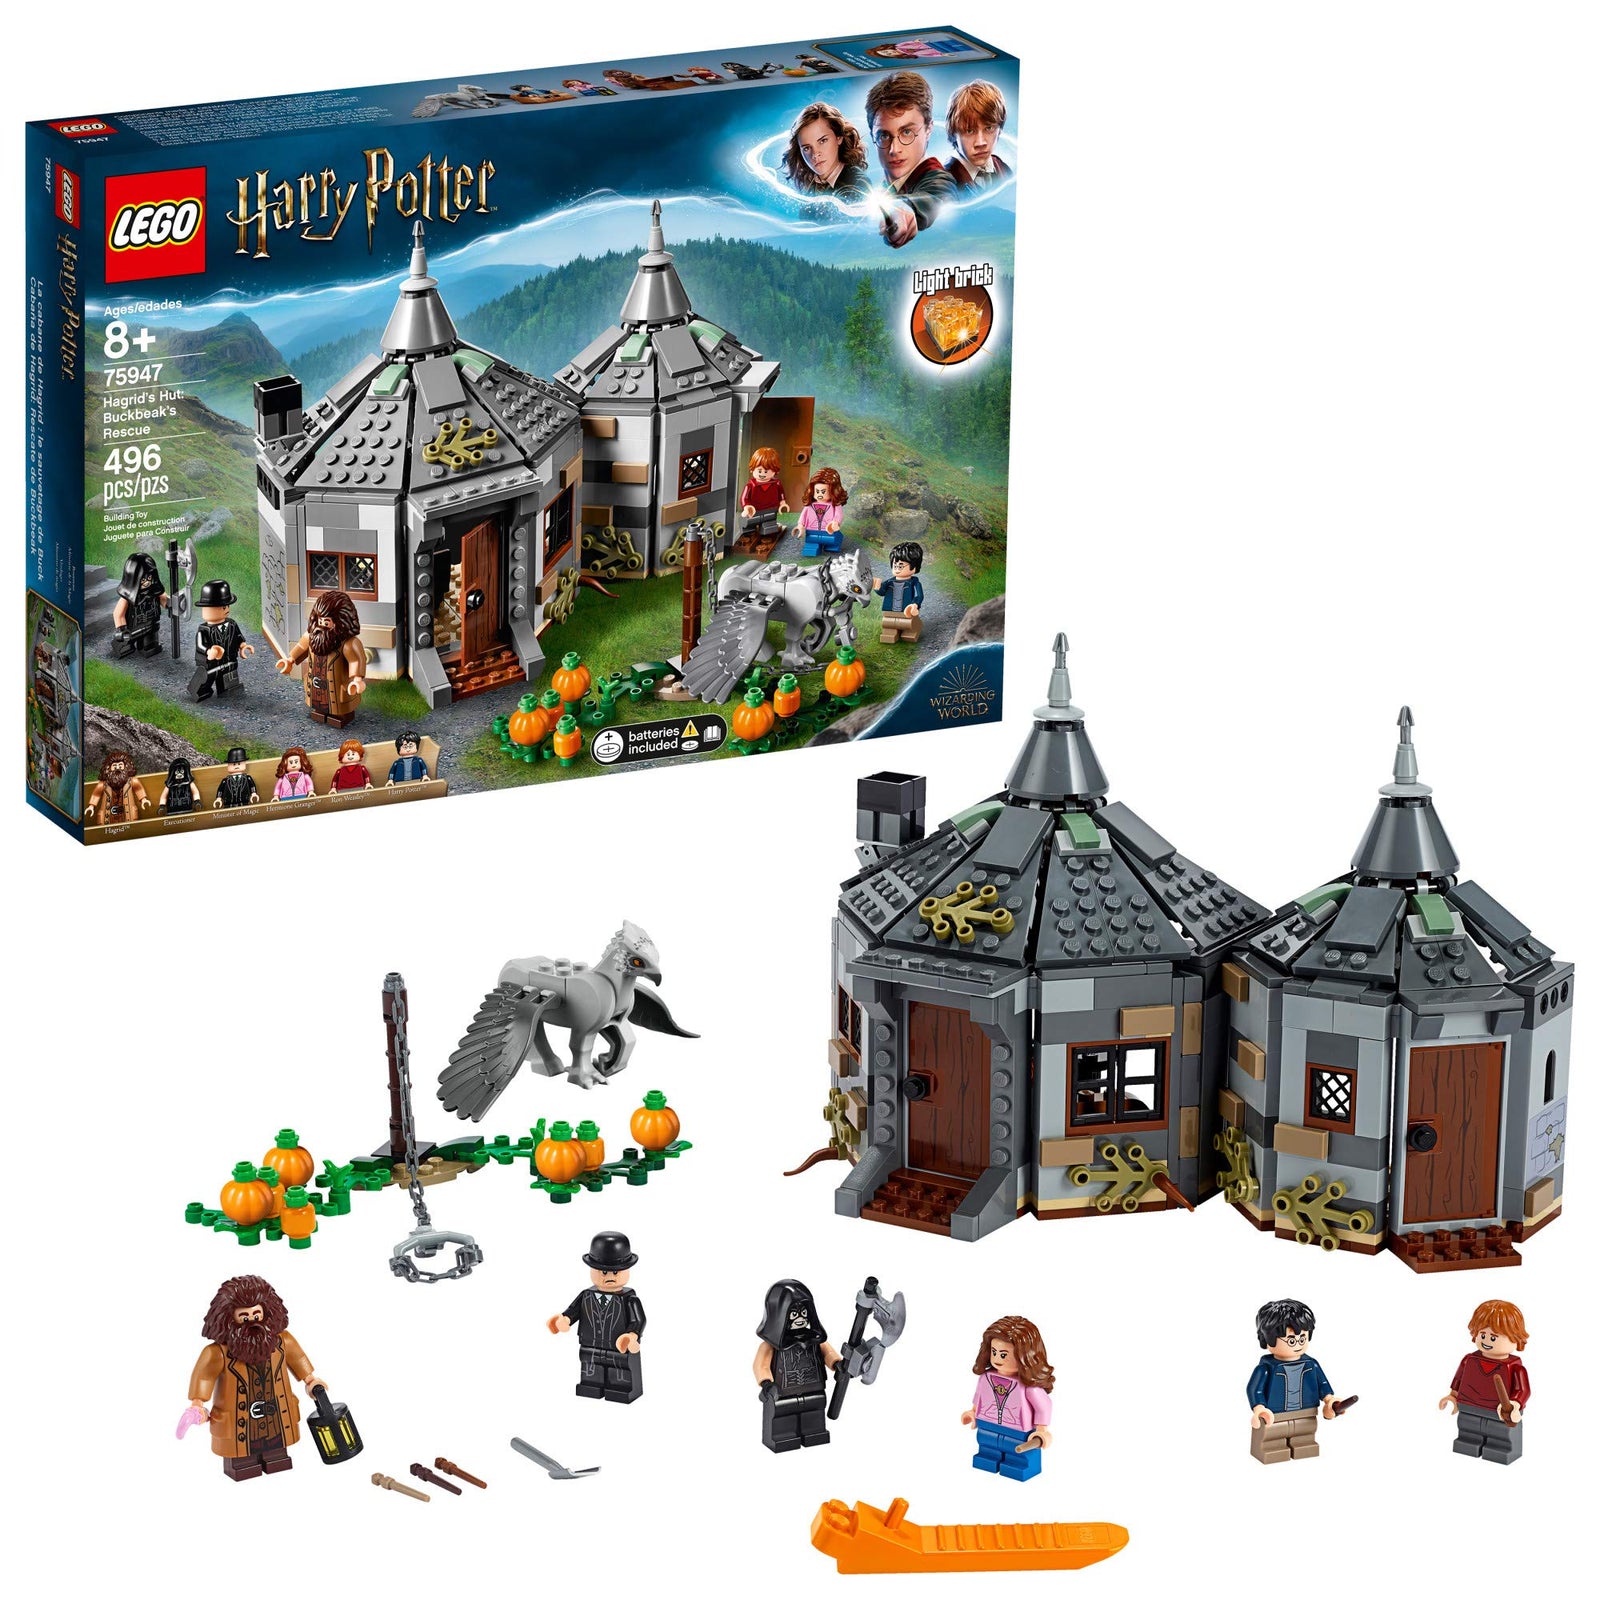 LEGO Harry Potter Hagrid's Hut: Buckbeak's Rescue 75947 Toy Hut Building Set from The Prisoner of Azkaban Features Buckbeak The Hippogriff Figure (496 Pieces)